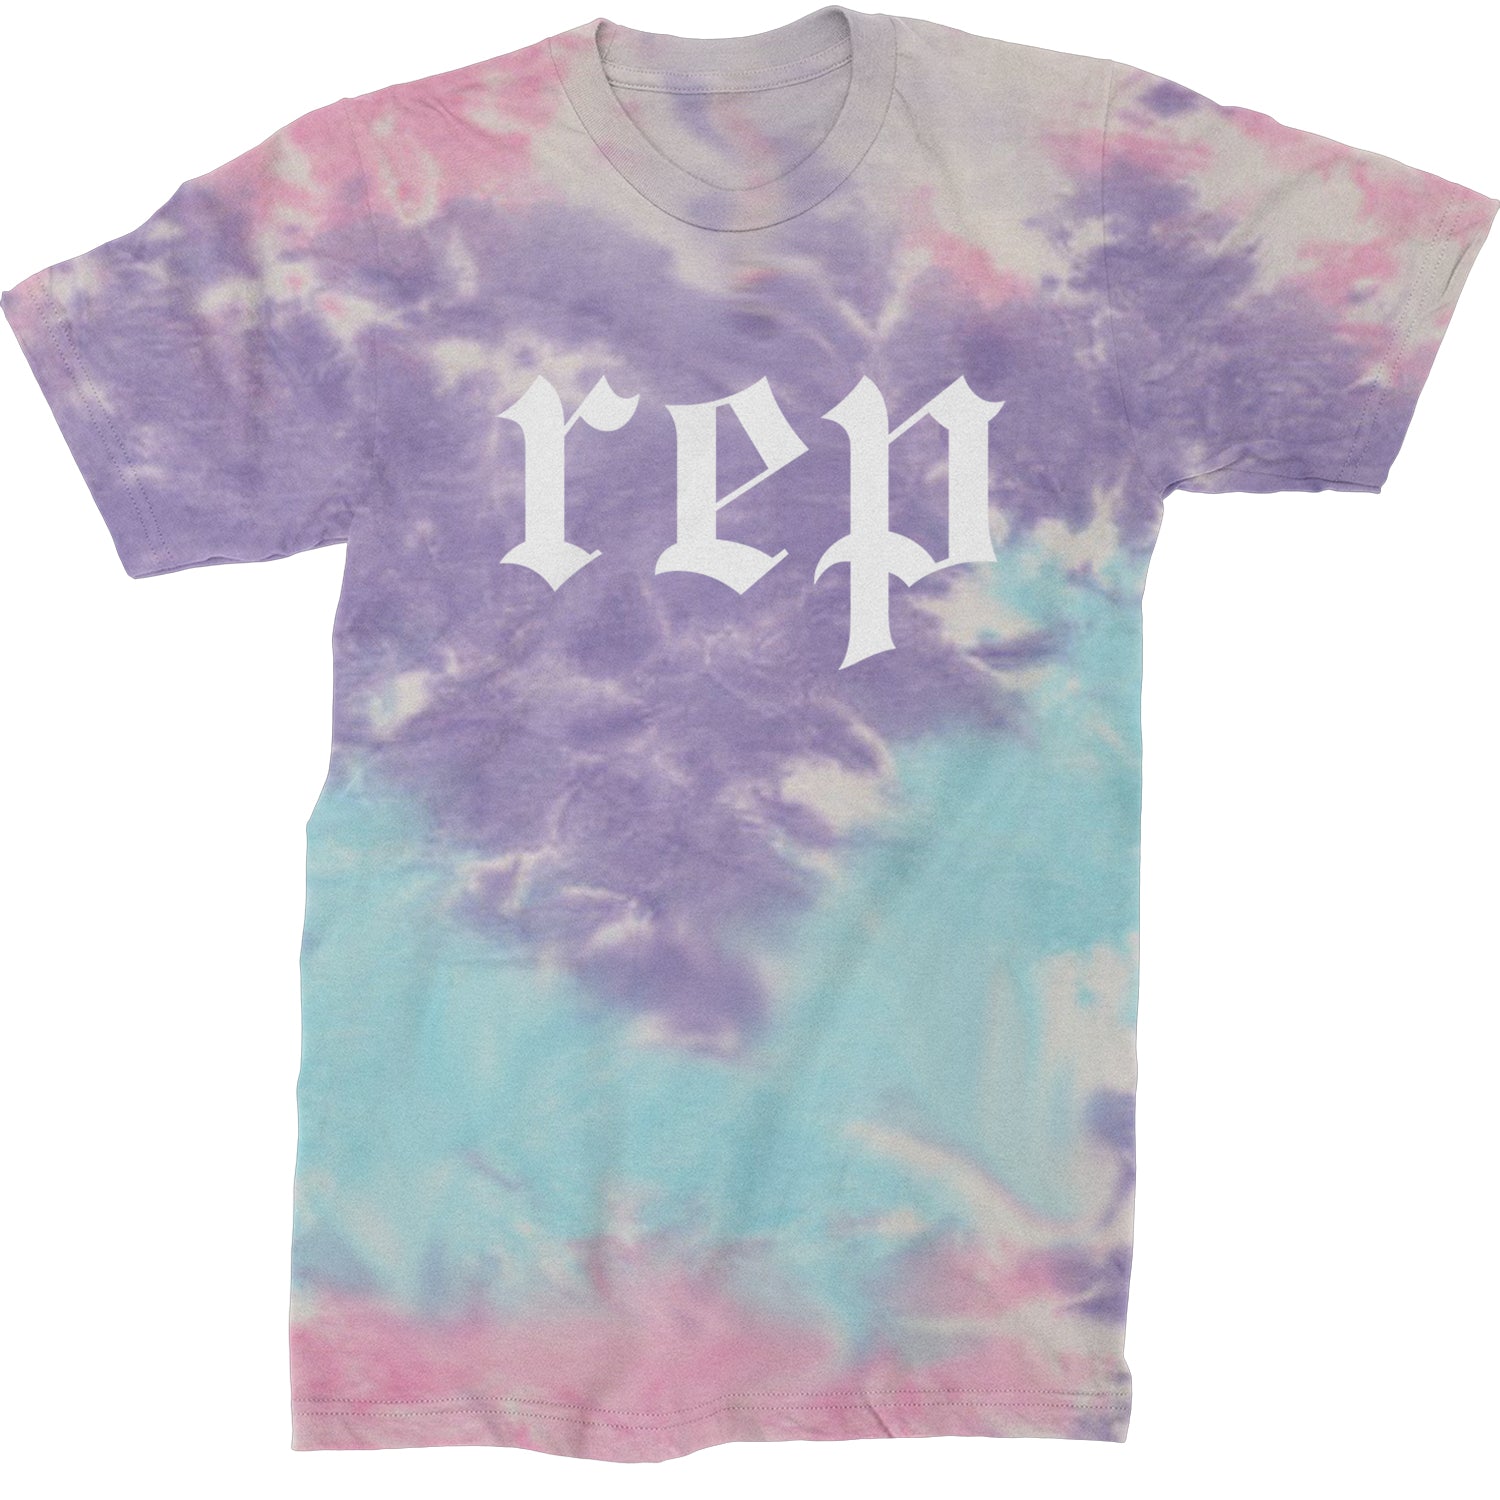 REP Reputation Eras Music Lover Gift Fan Favorite Mens T-shirt Tie-Dye Cotton Candy